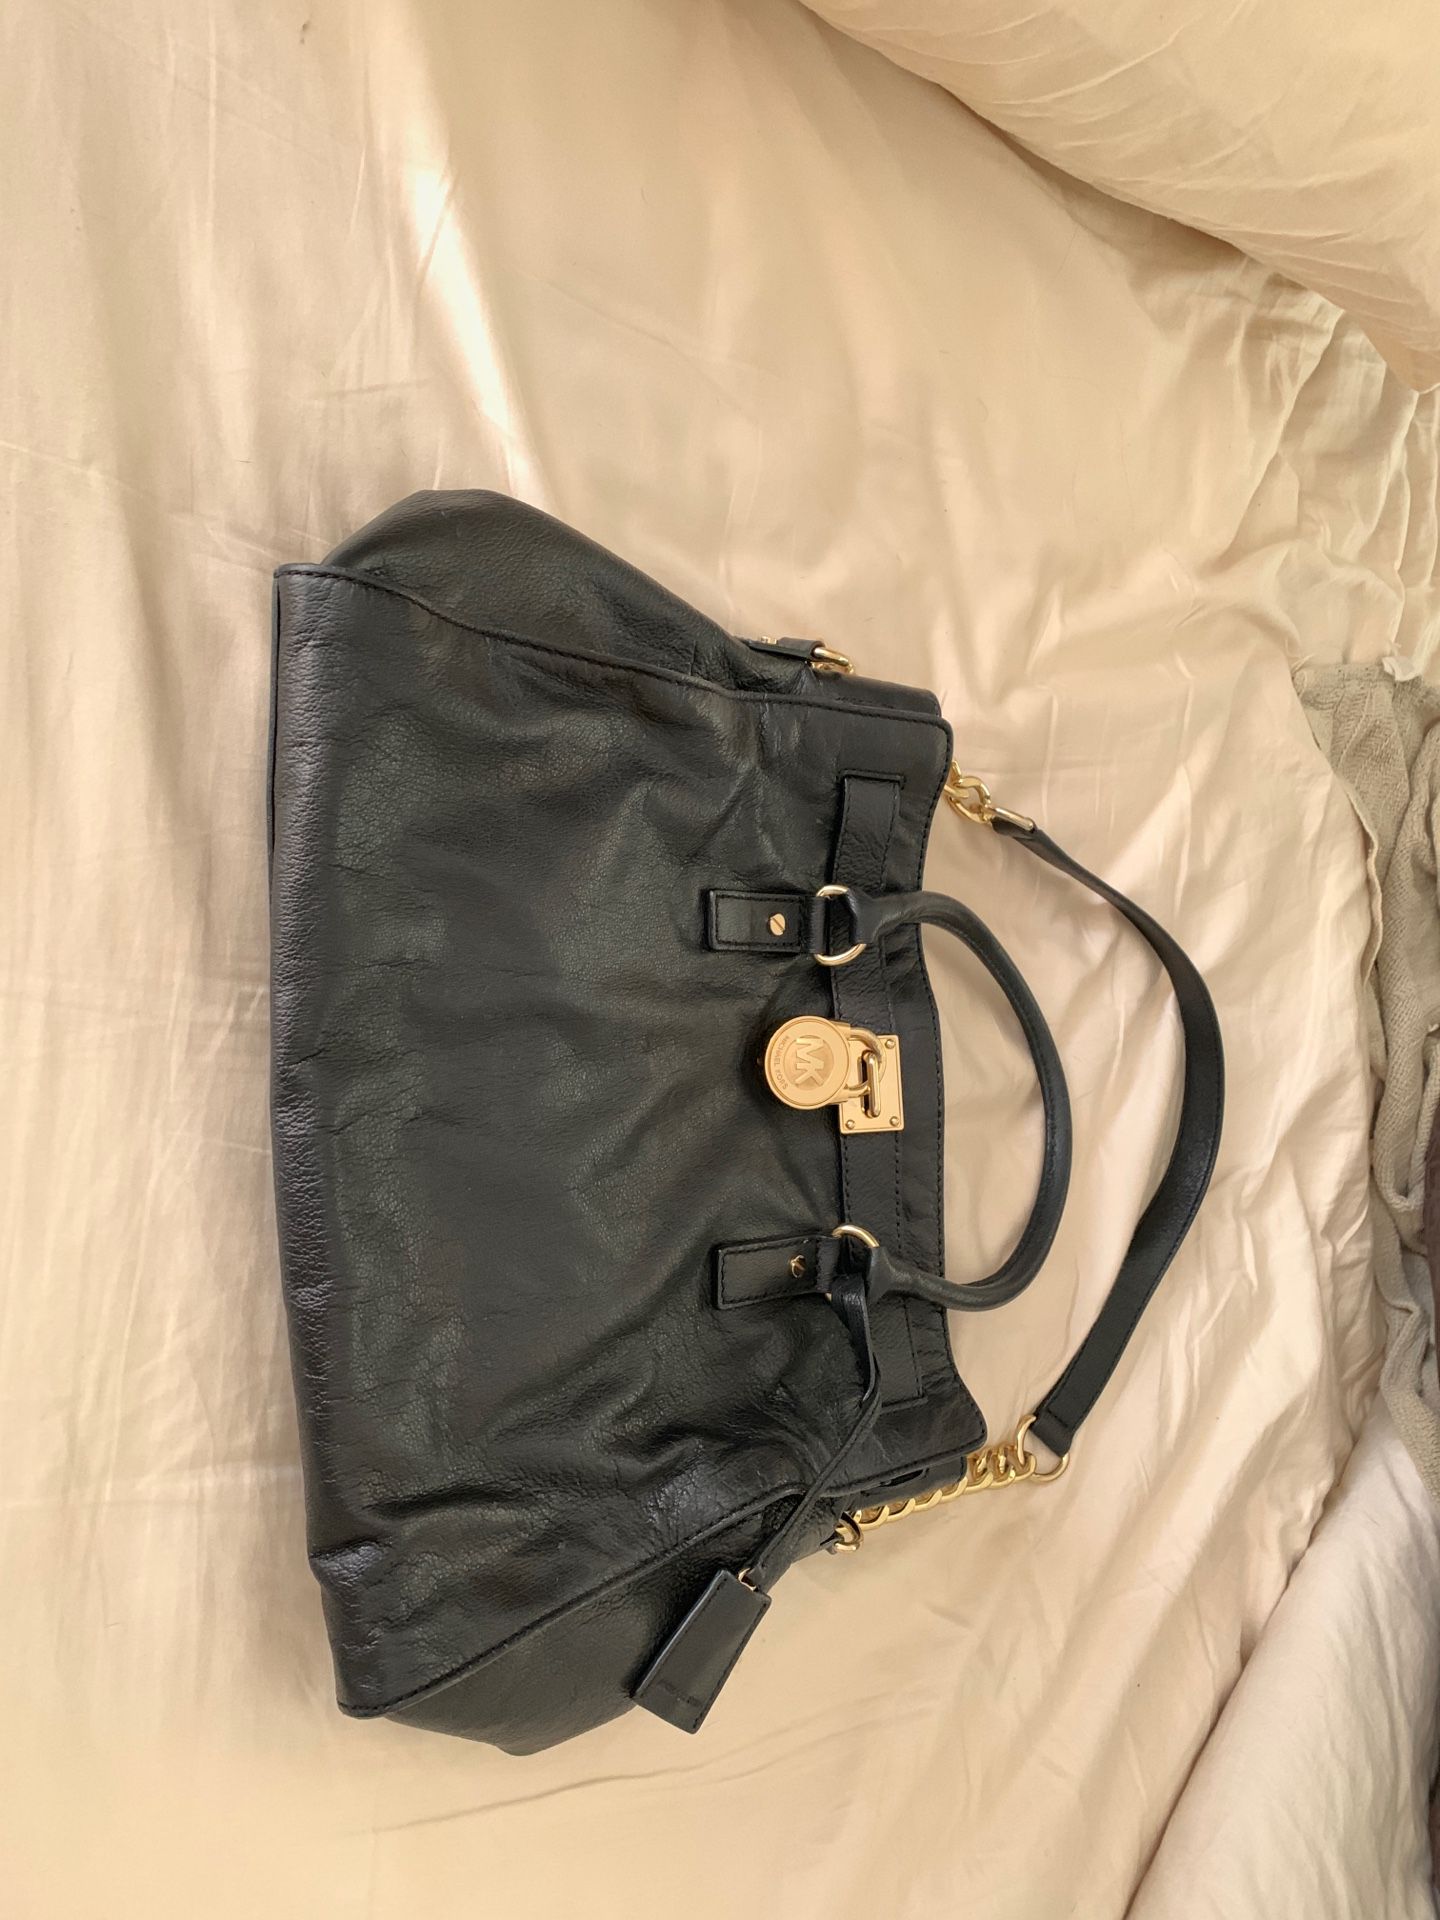 Michael Kors Large Black Hamilton Bag for Sale in BETHEL, WA